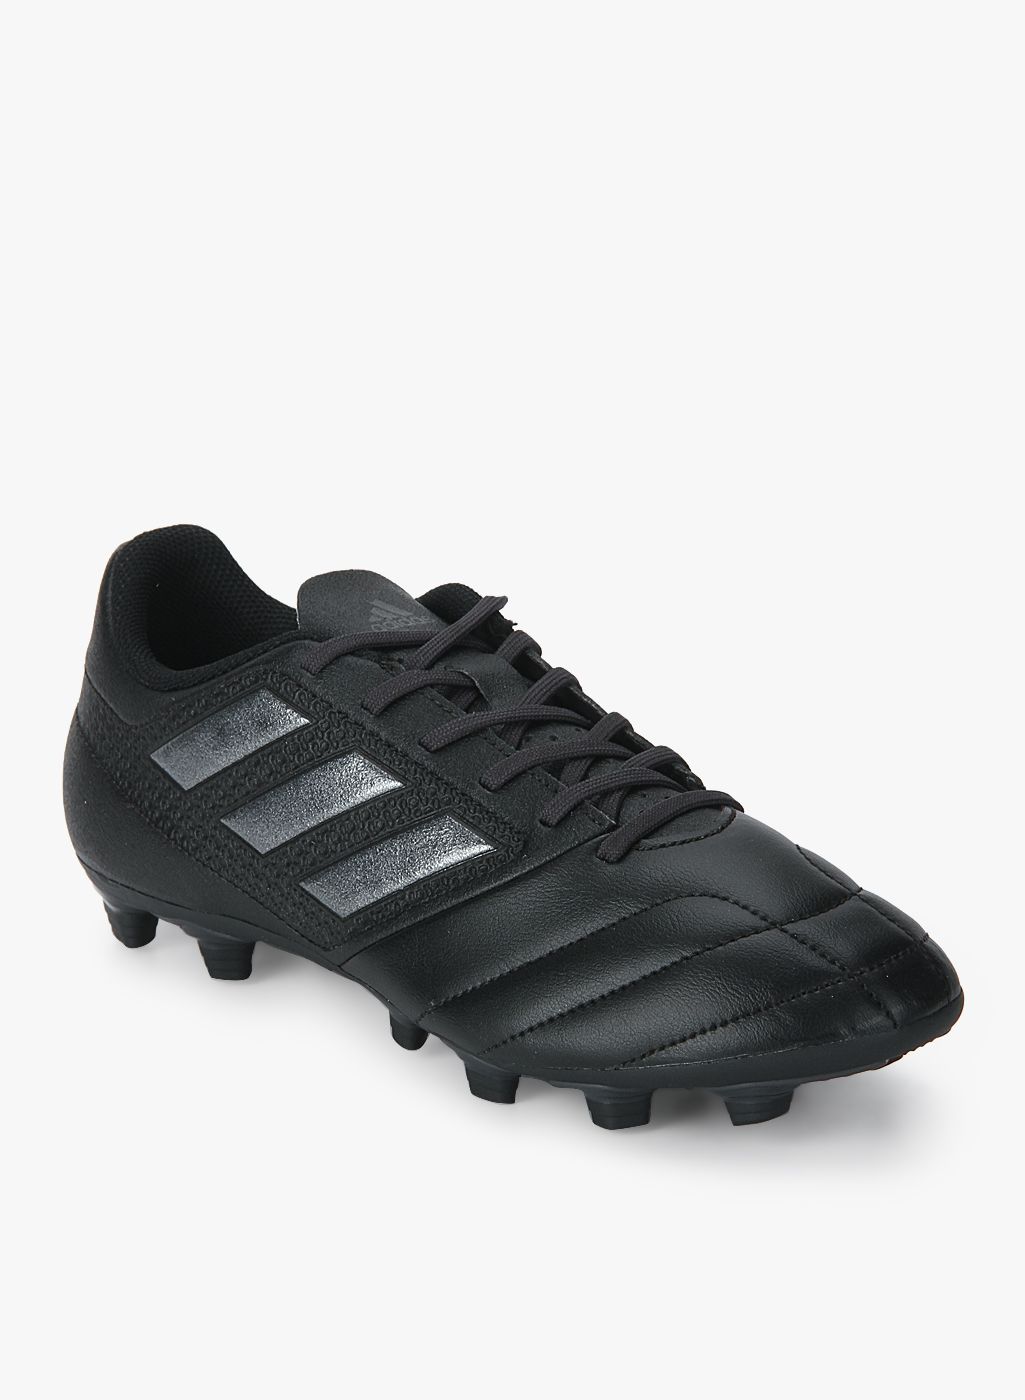 Black ACE 17.4 FXG Football Shoes 